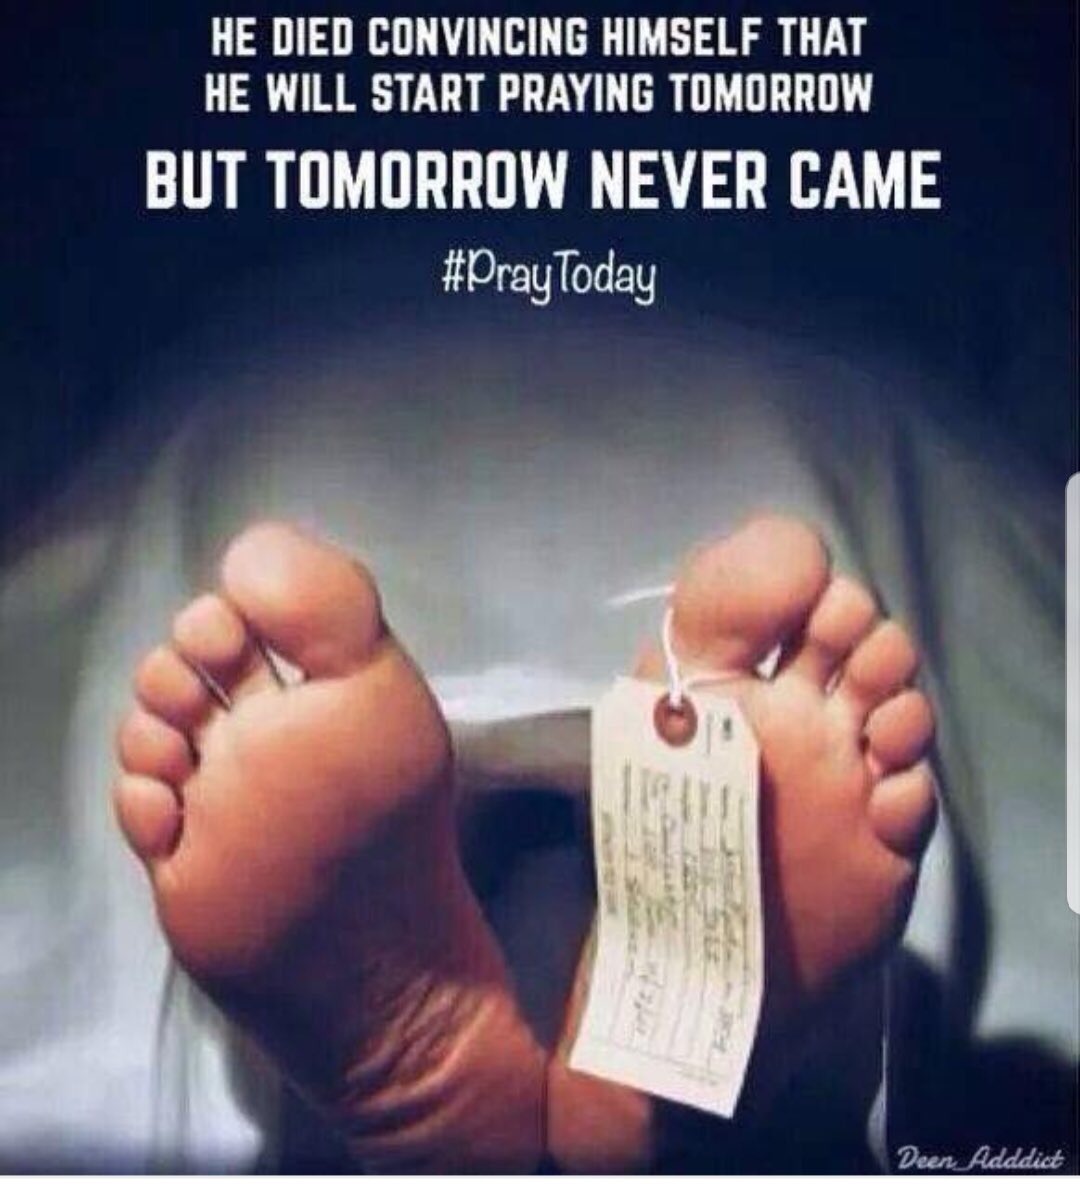 Pray before you are prayed upon. #salah #fiveaday #praytoday #islam #logic #sunnah #quran